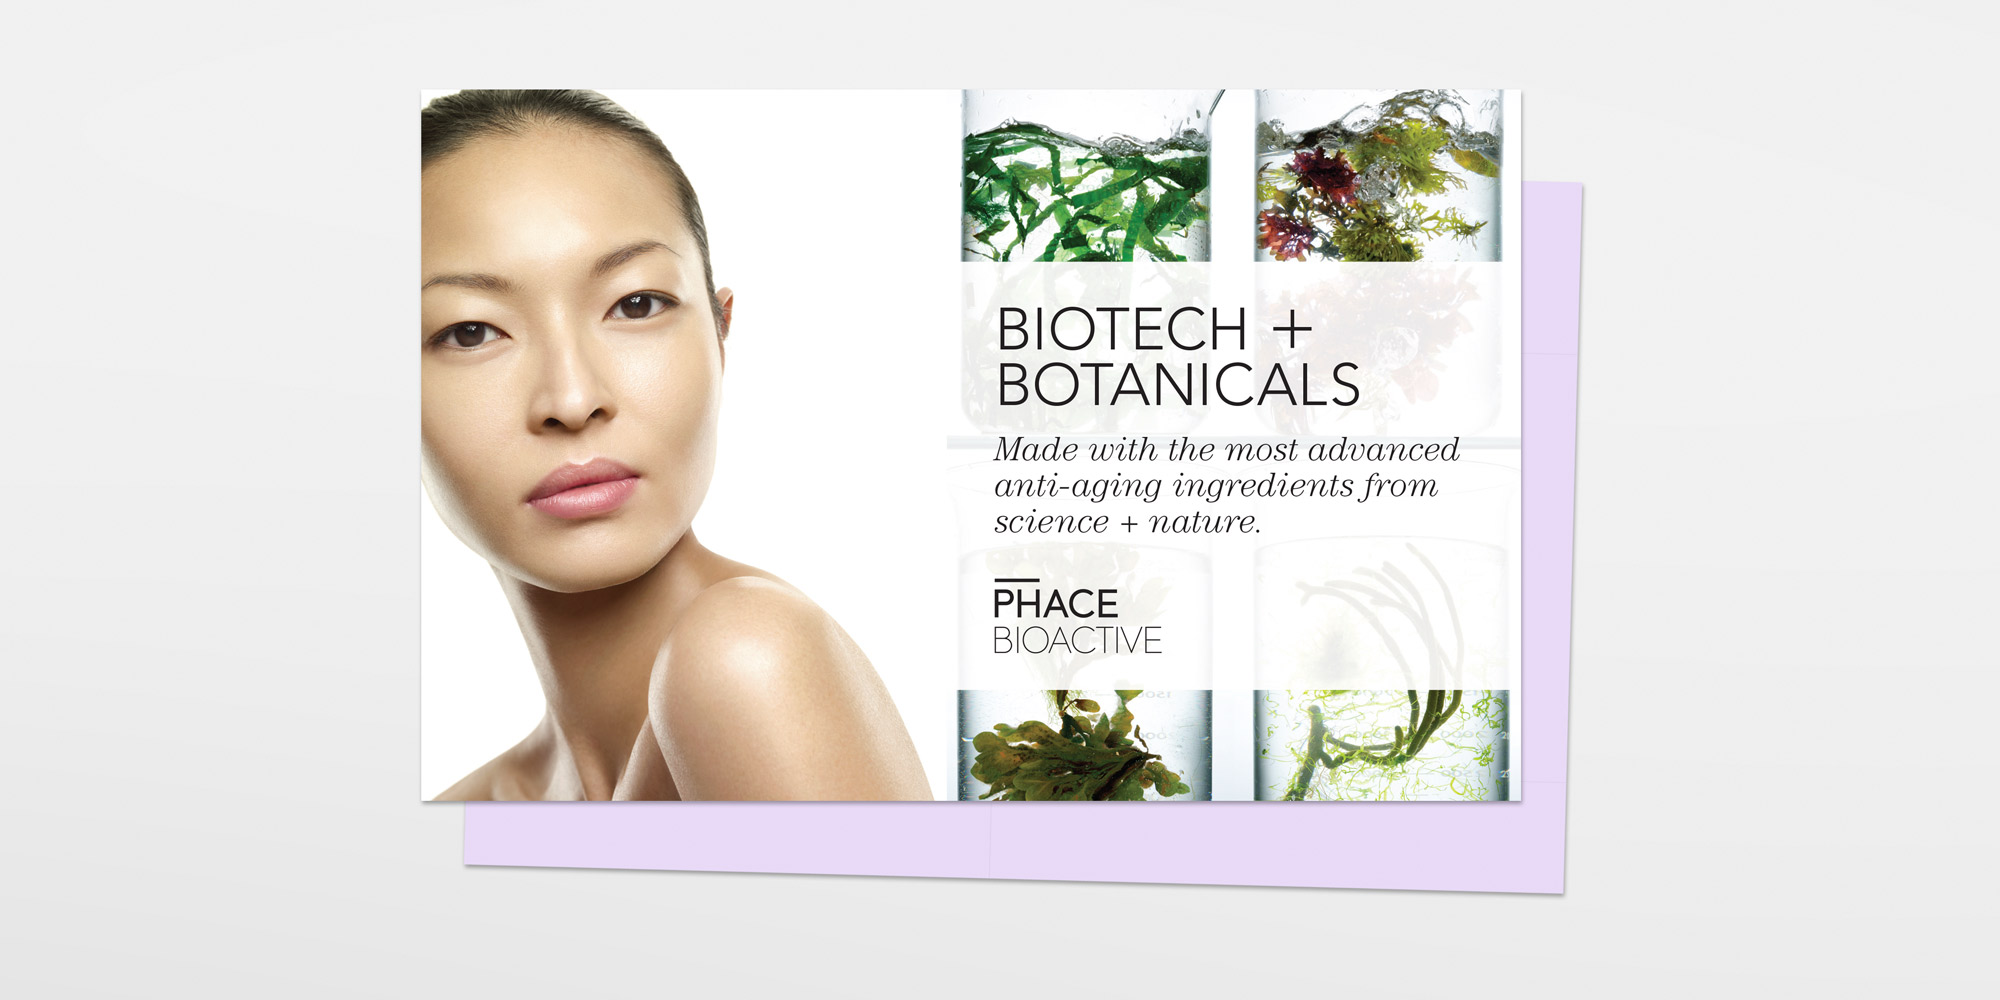 Phace Bioactive Ad